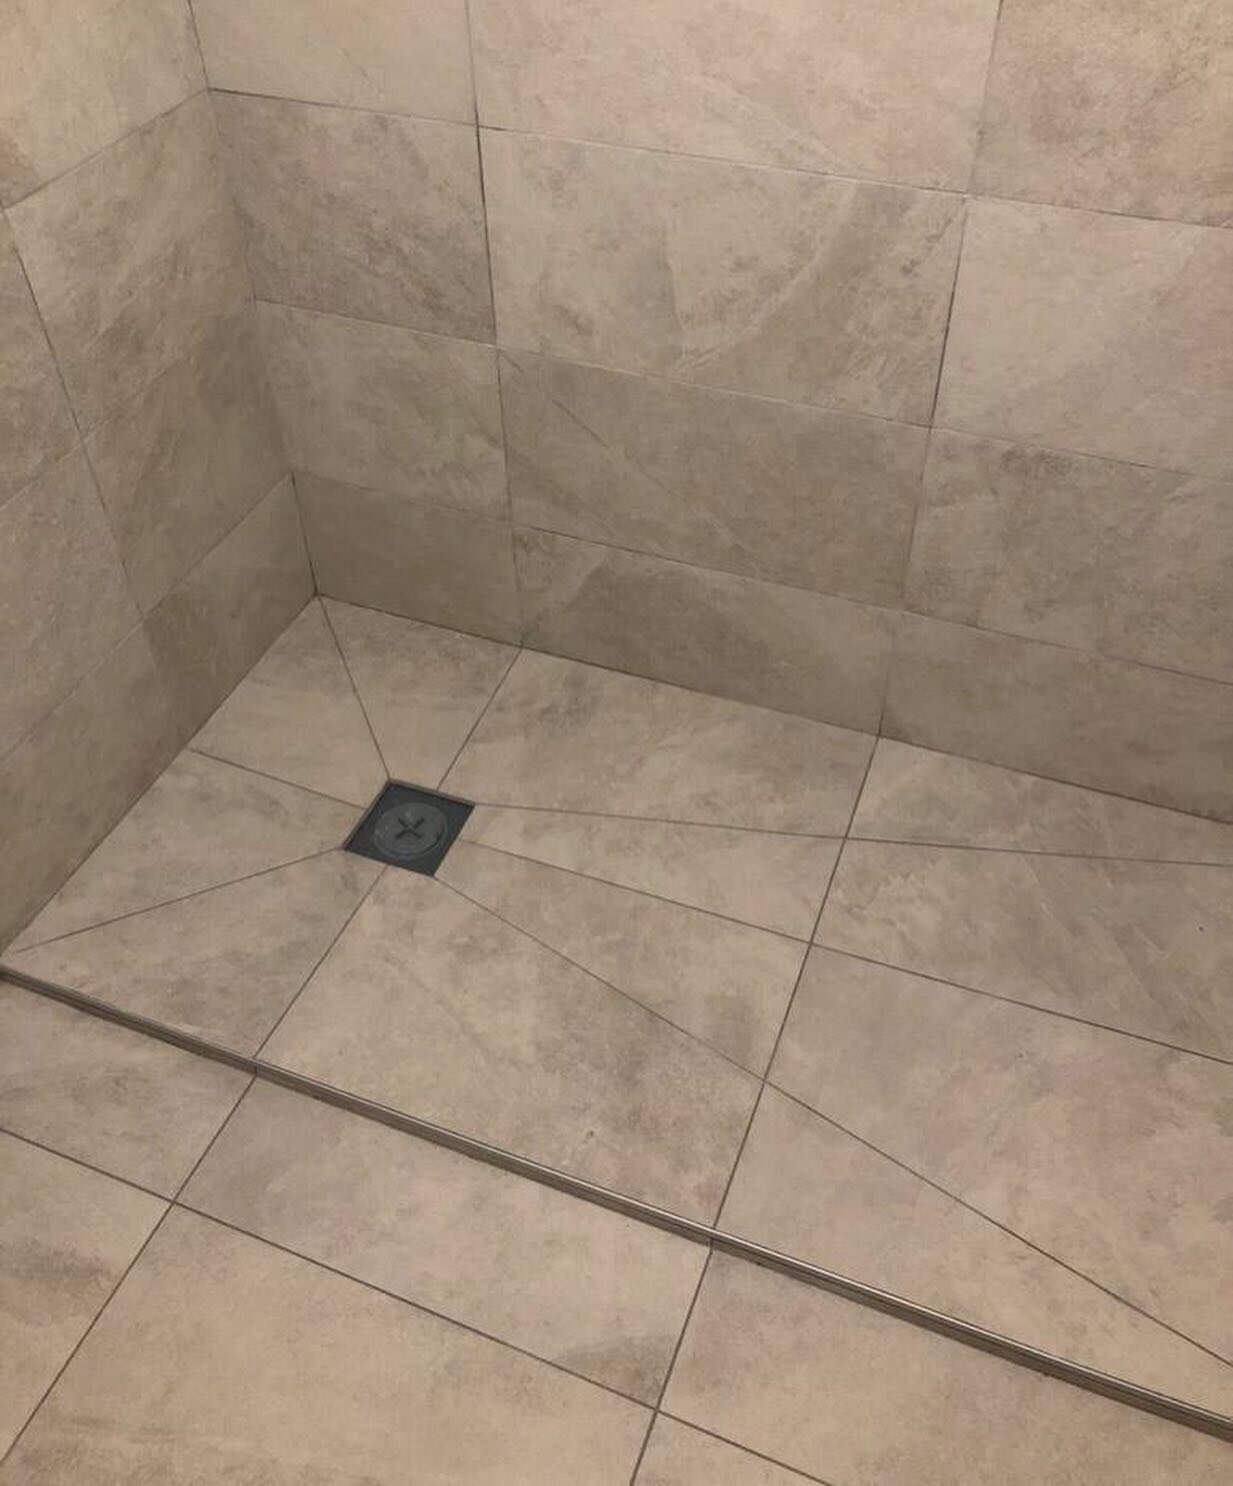 A completed wet room, tiles supplied by the @bocchettaceramica studio
.
.
.
.
.
.
.
.
#luxuryhomes #luxurybathrooms #bathroomdesign #bathroom #bathroomdecor #living #luxury #luxurylifestyle #decor #tiles #tiling #tilingwork #tileshower #bathroomtiles